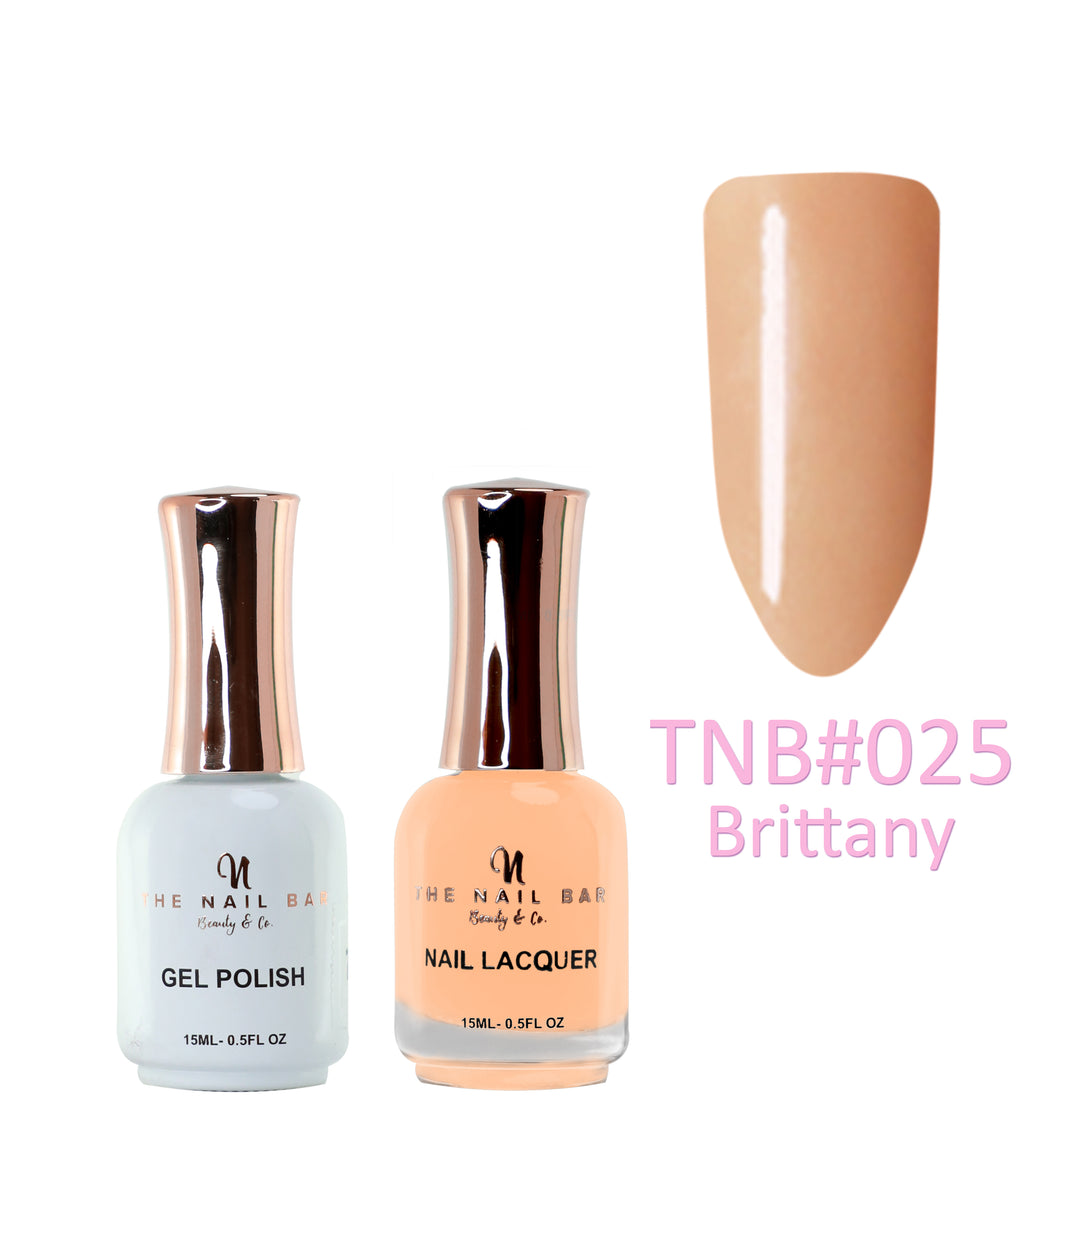 Dual Polish/Gel colour matching (15ml) - Brittany - The Nail Bar Beauty & Co.